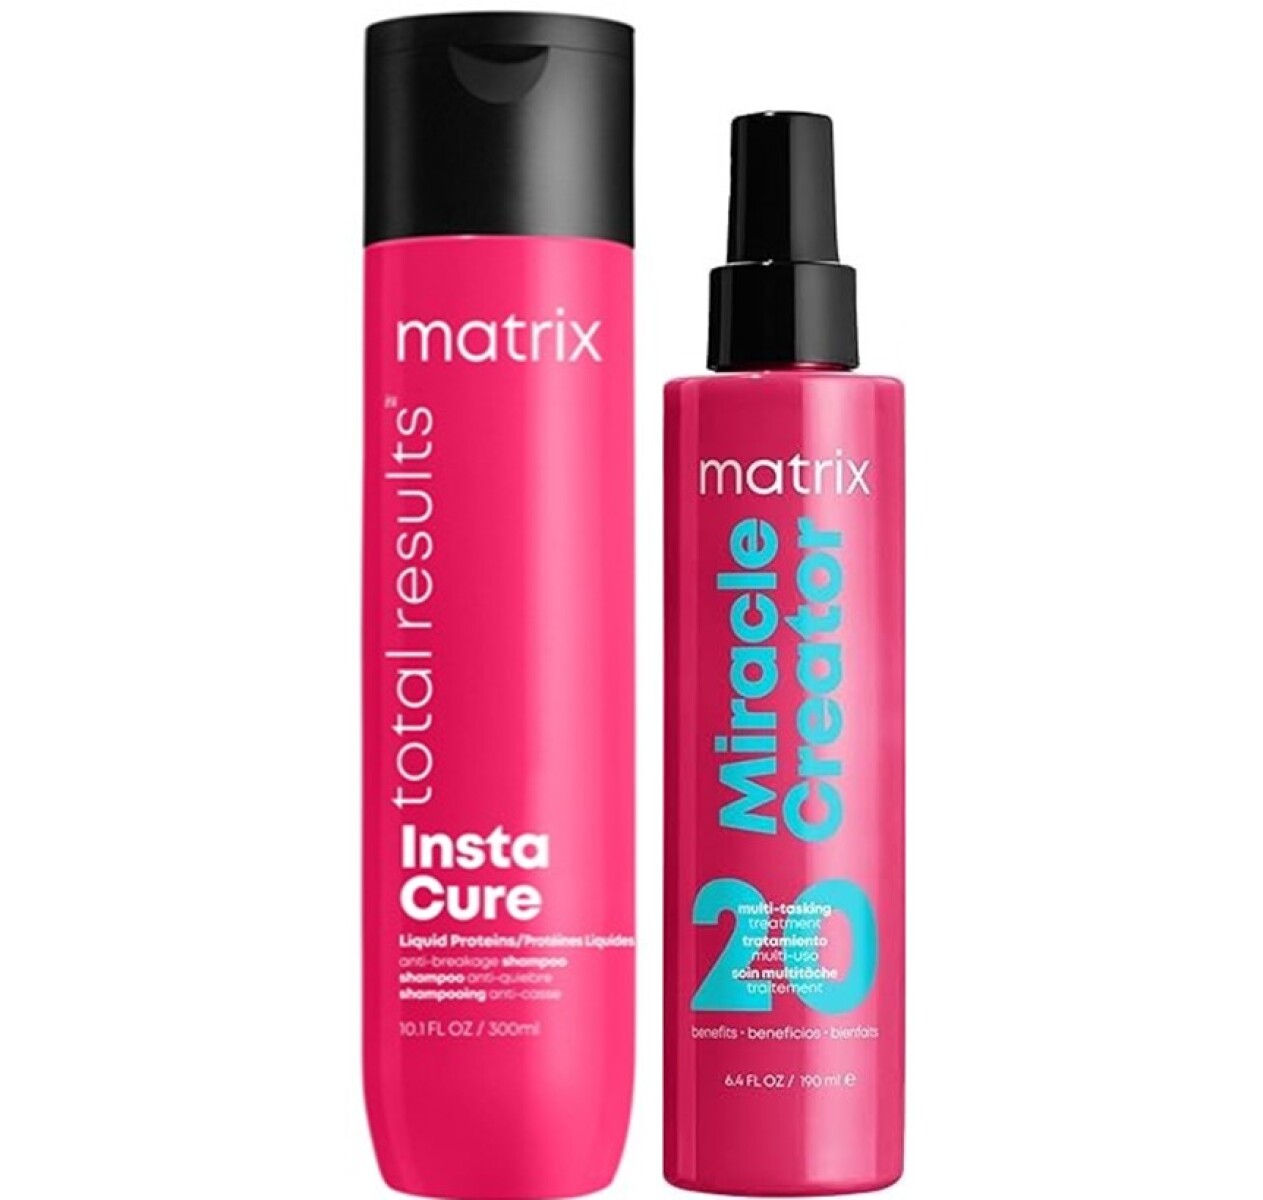 Matrix Pack Insta Cure Shampoo 300 ml + Miracle Creator 190 ml 